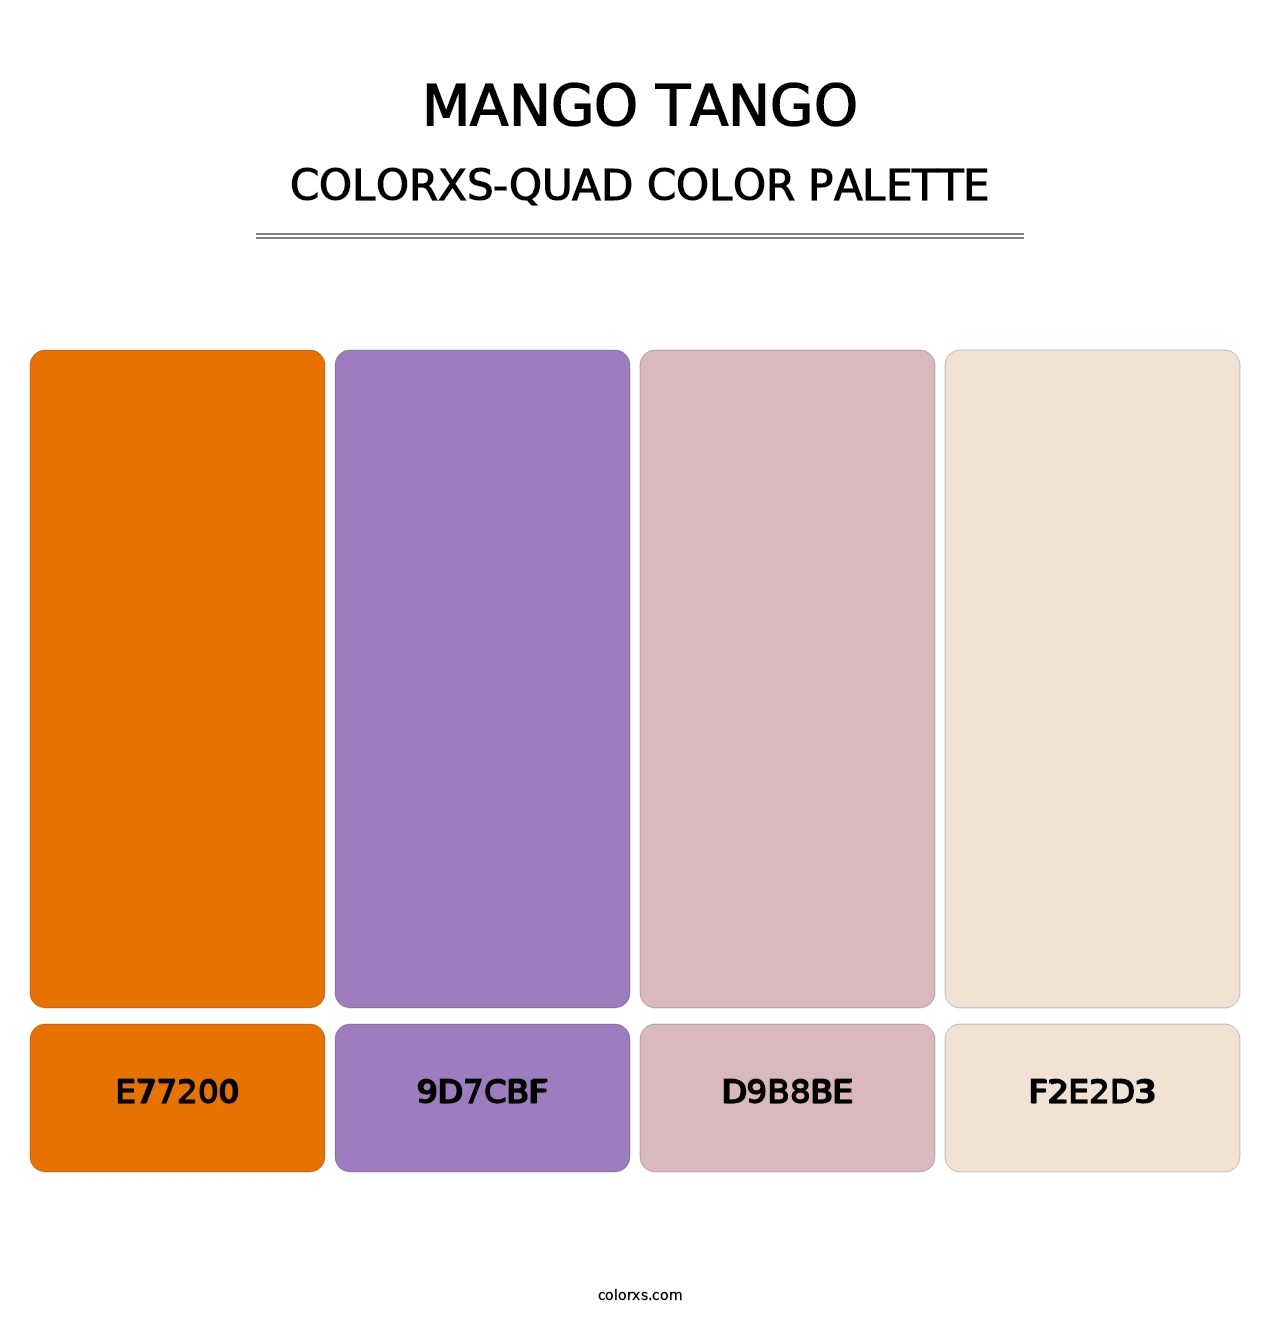 Mango Tango - Colorxs Quad Palette